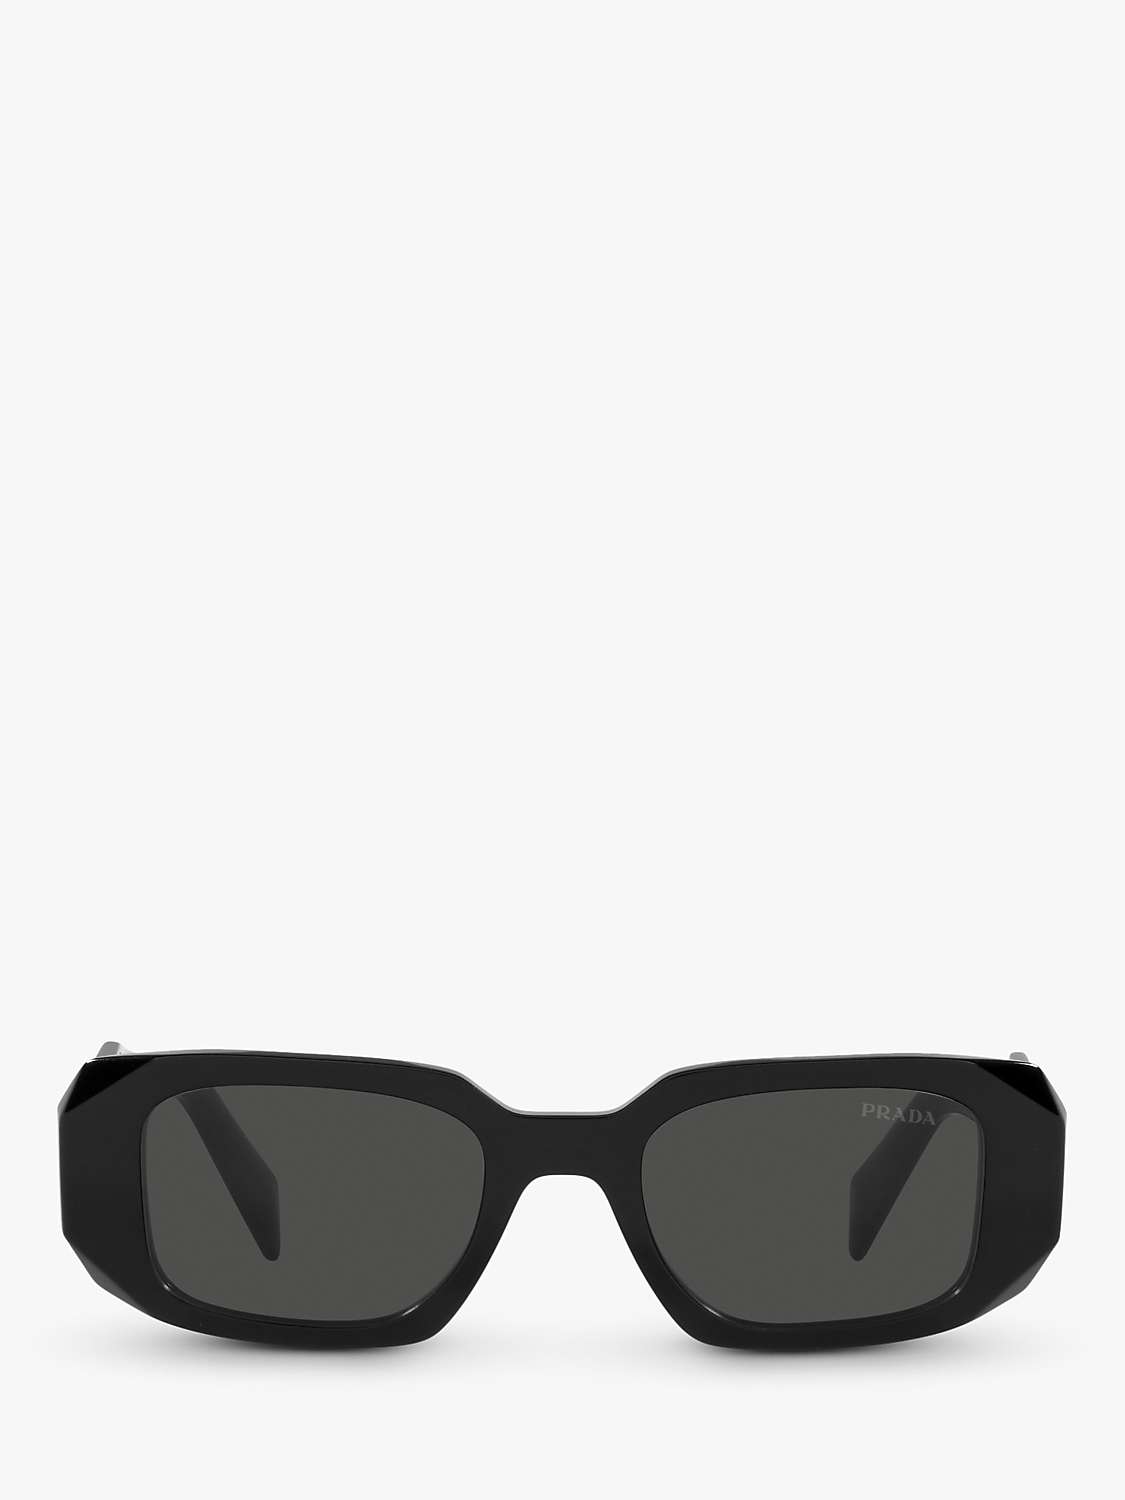 Buy Prada PR 17WS Women's Square Sunglasses, Black Online at johnlewis.com